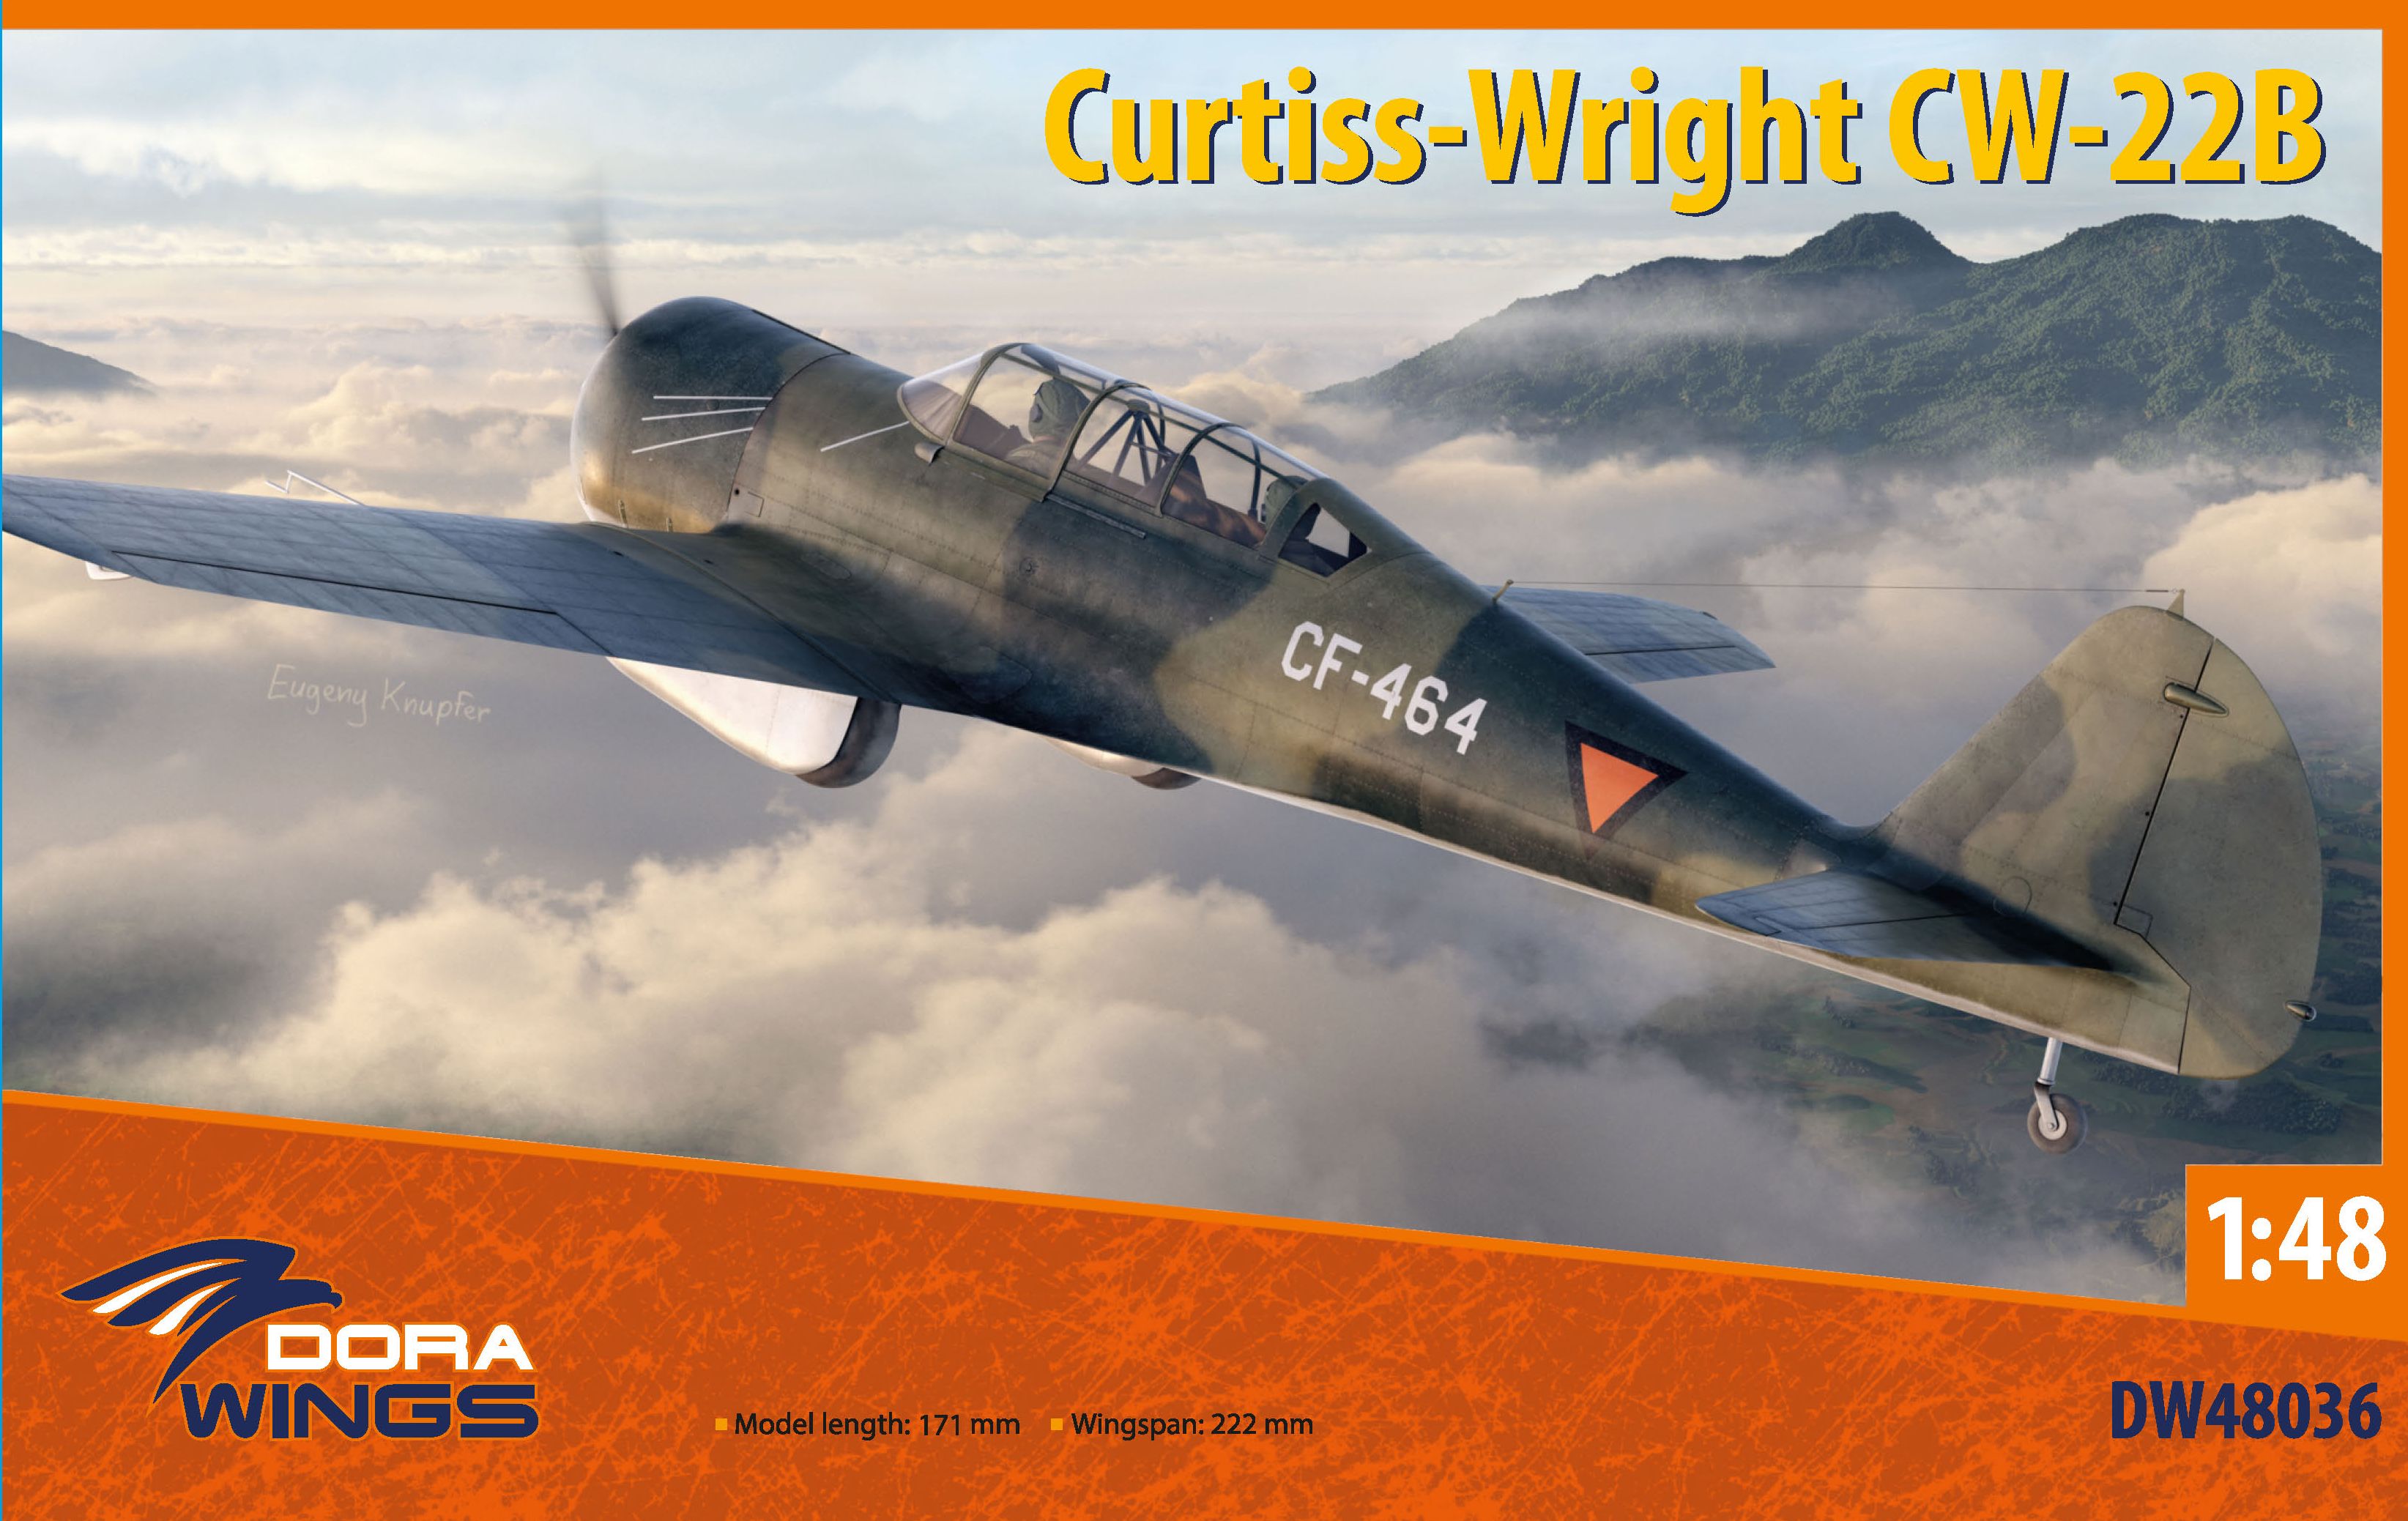 Curtiss Wright CW-22B (DW48036)